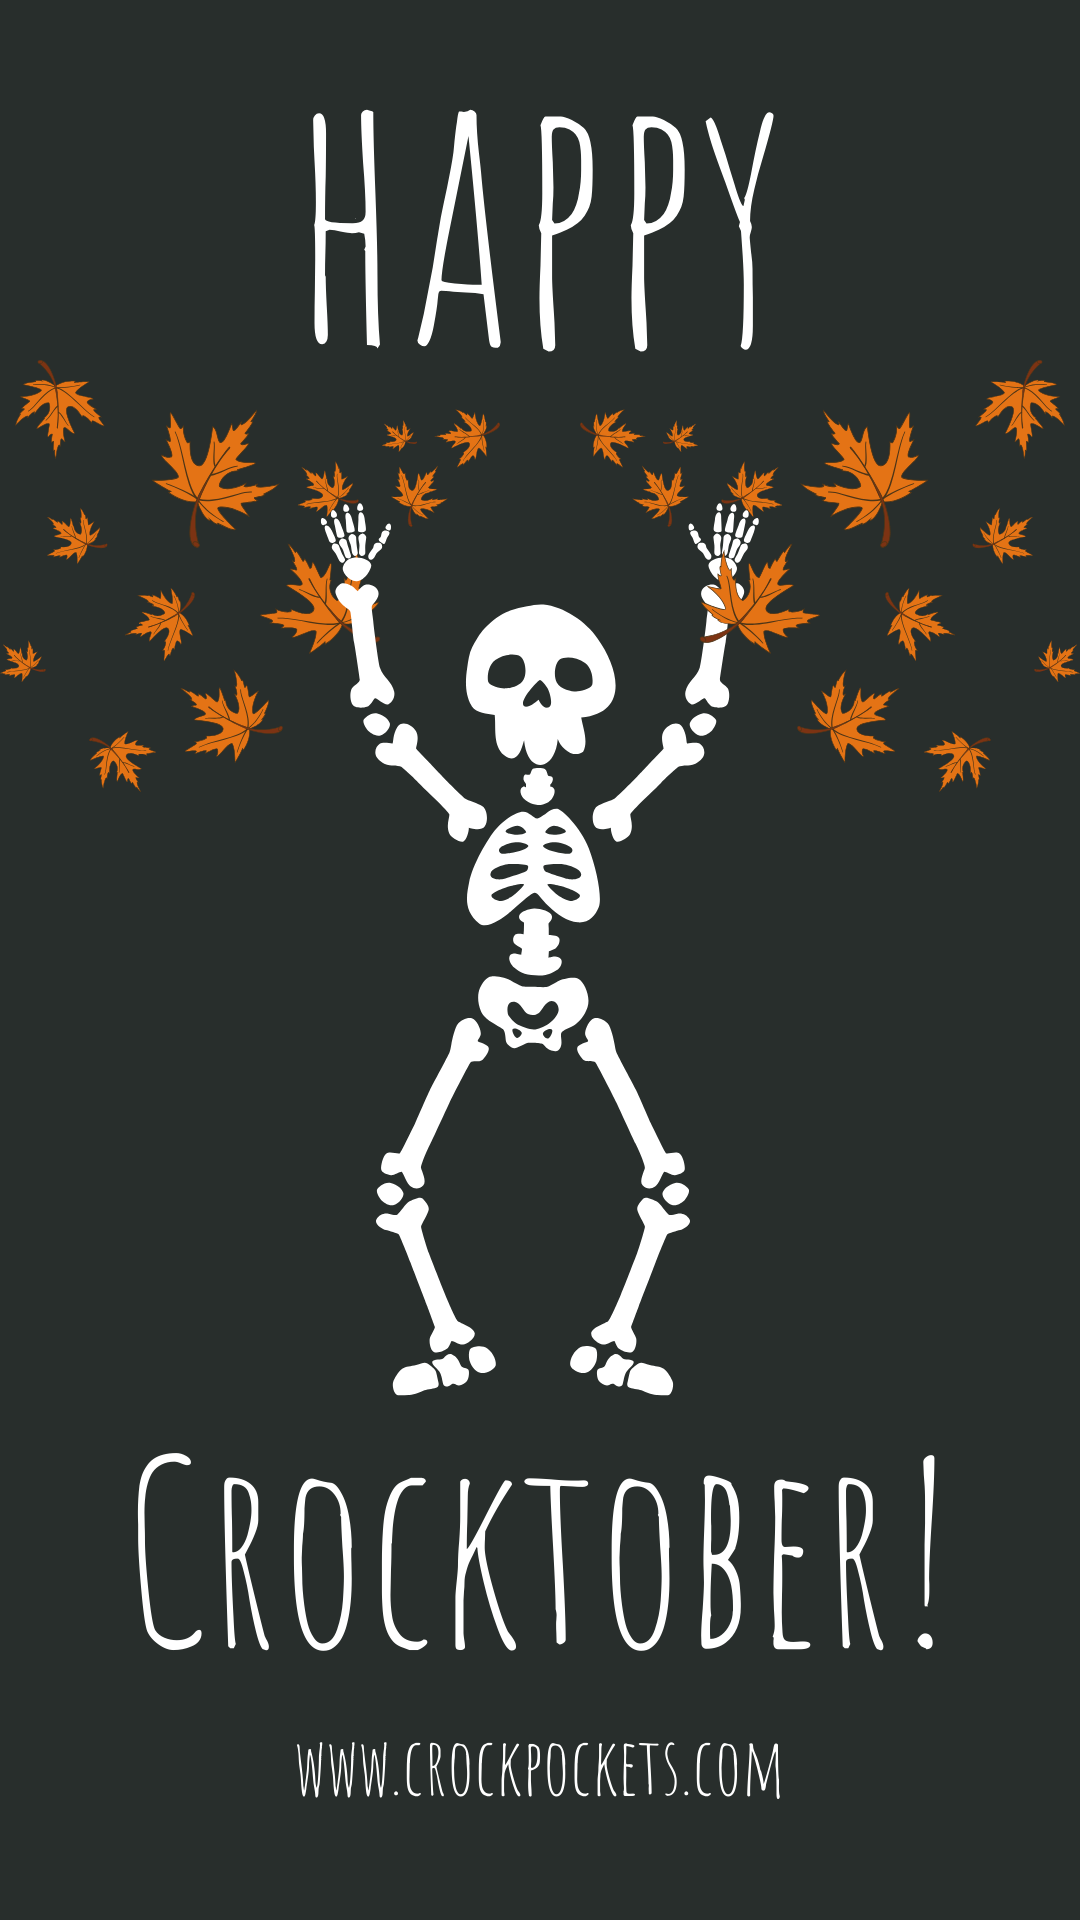 Crocktober Skeleton with fall leaves